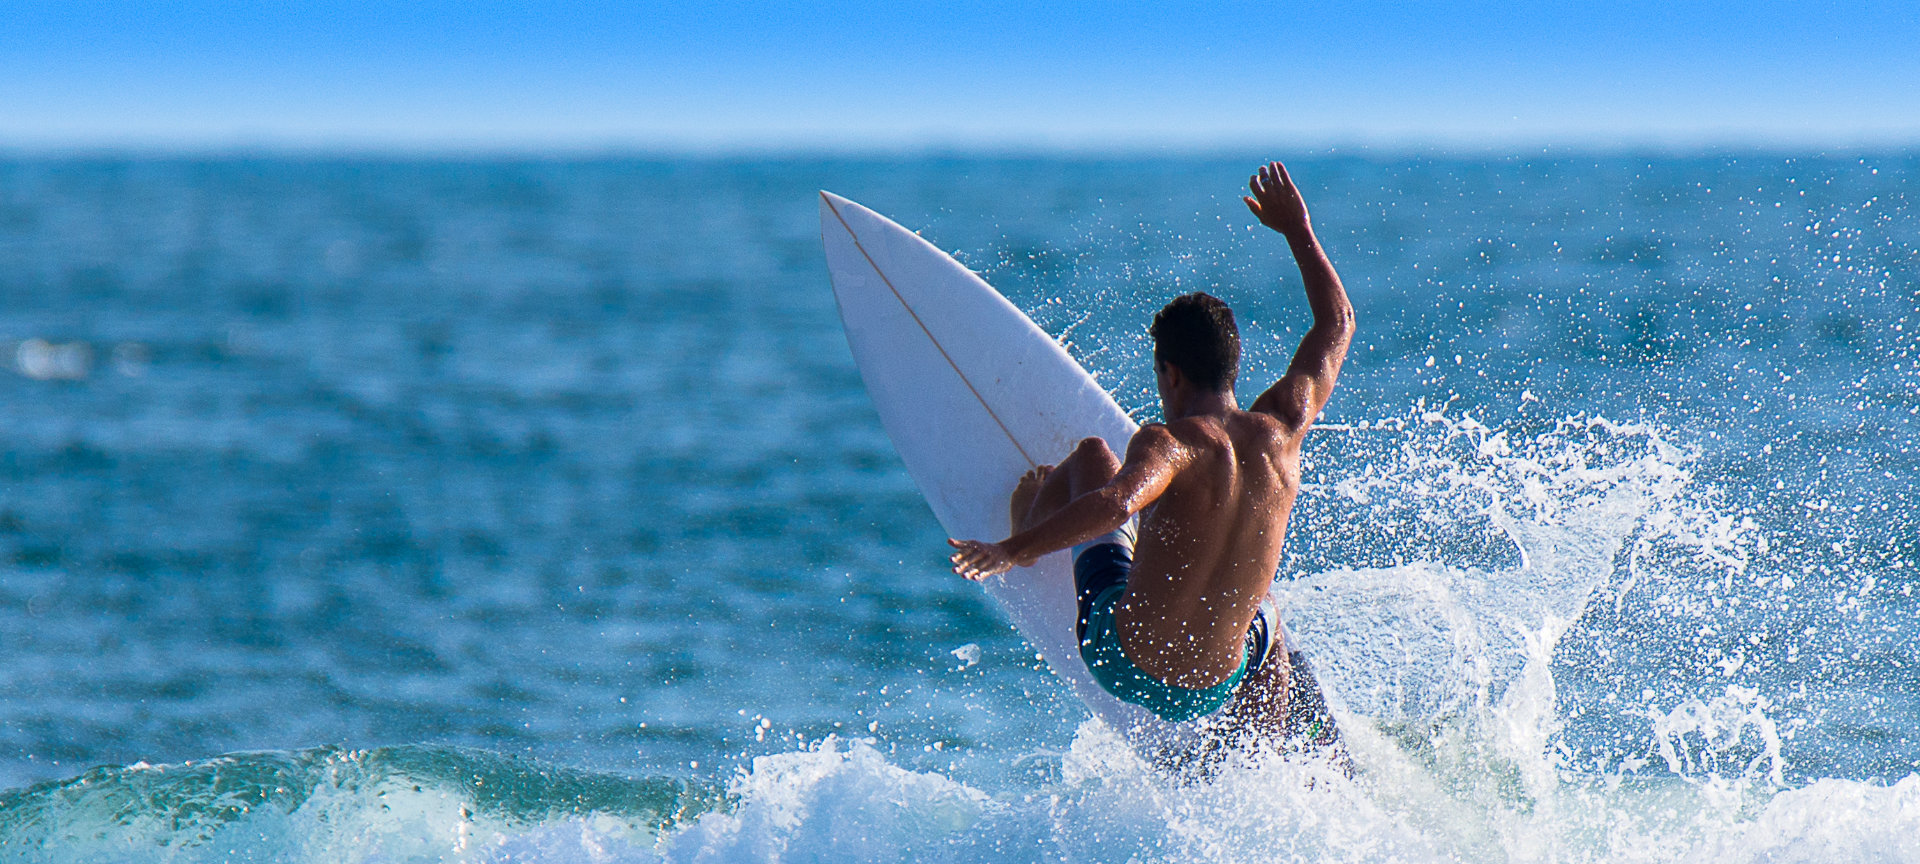 Surfista realizando un giro de 180º sobre la ola